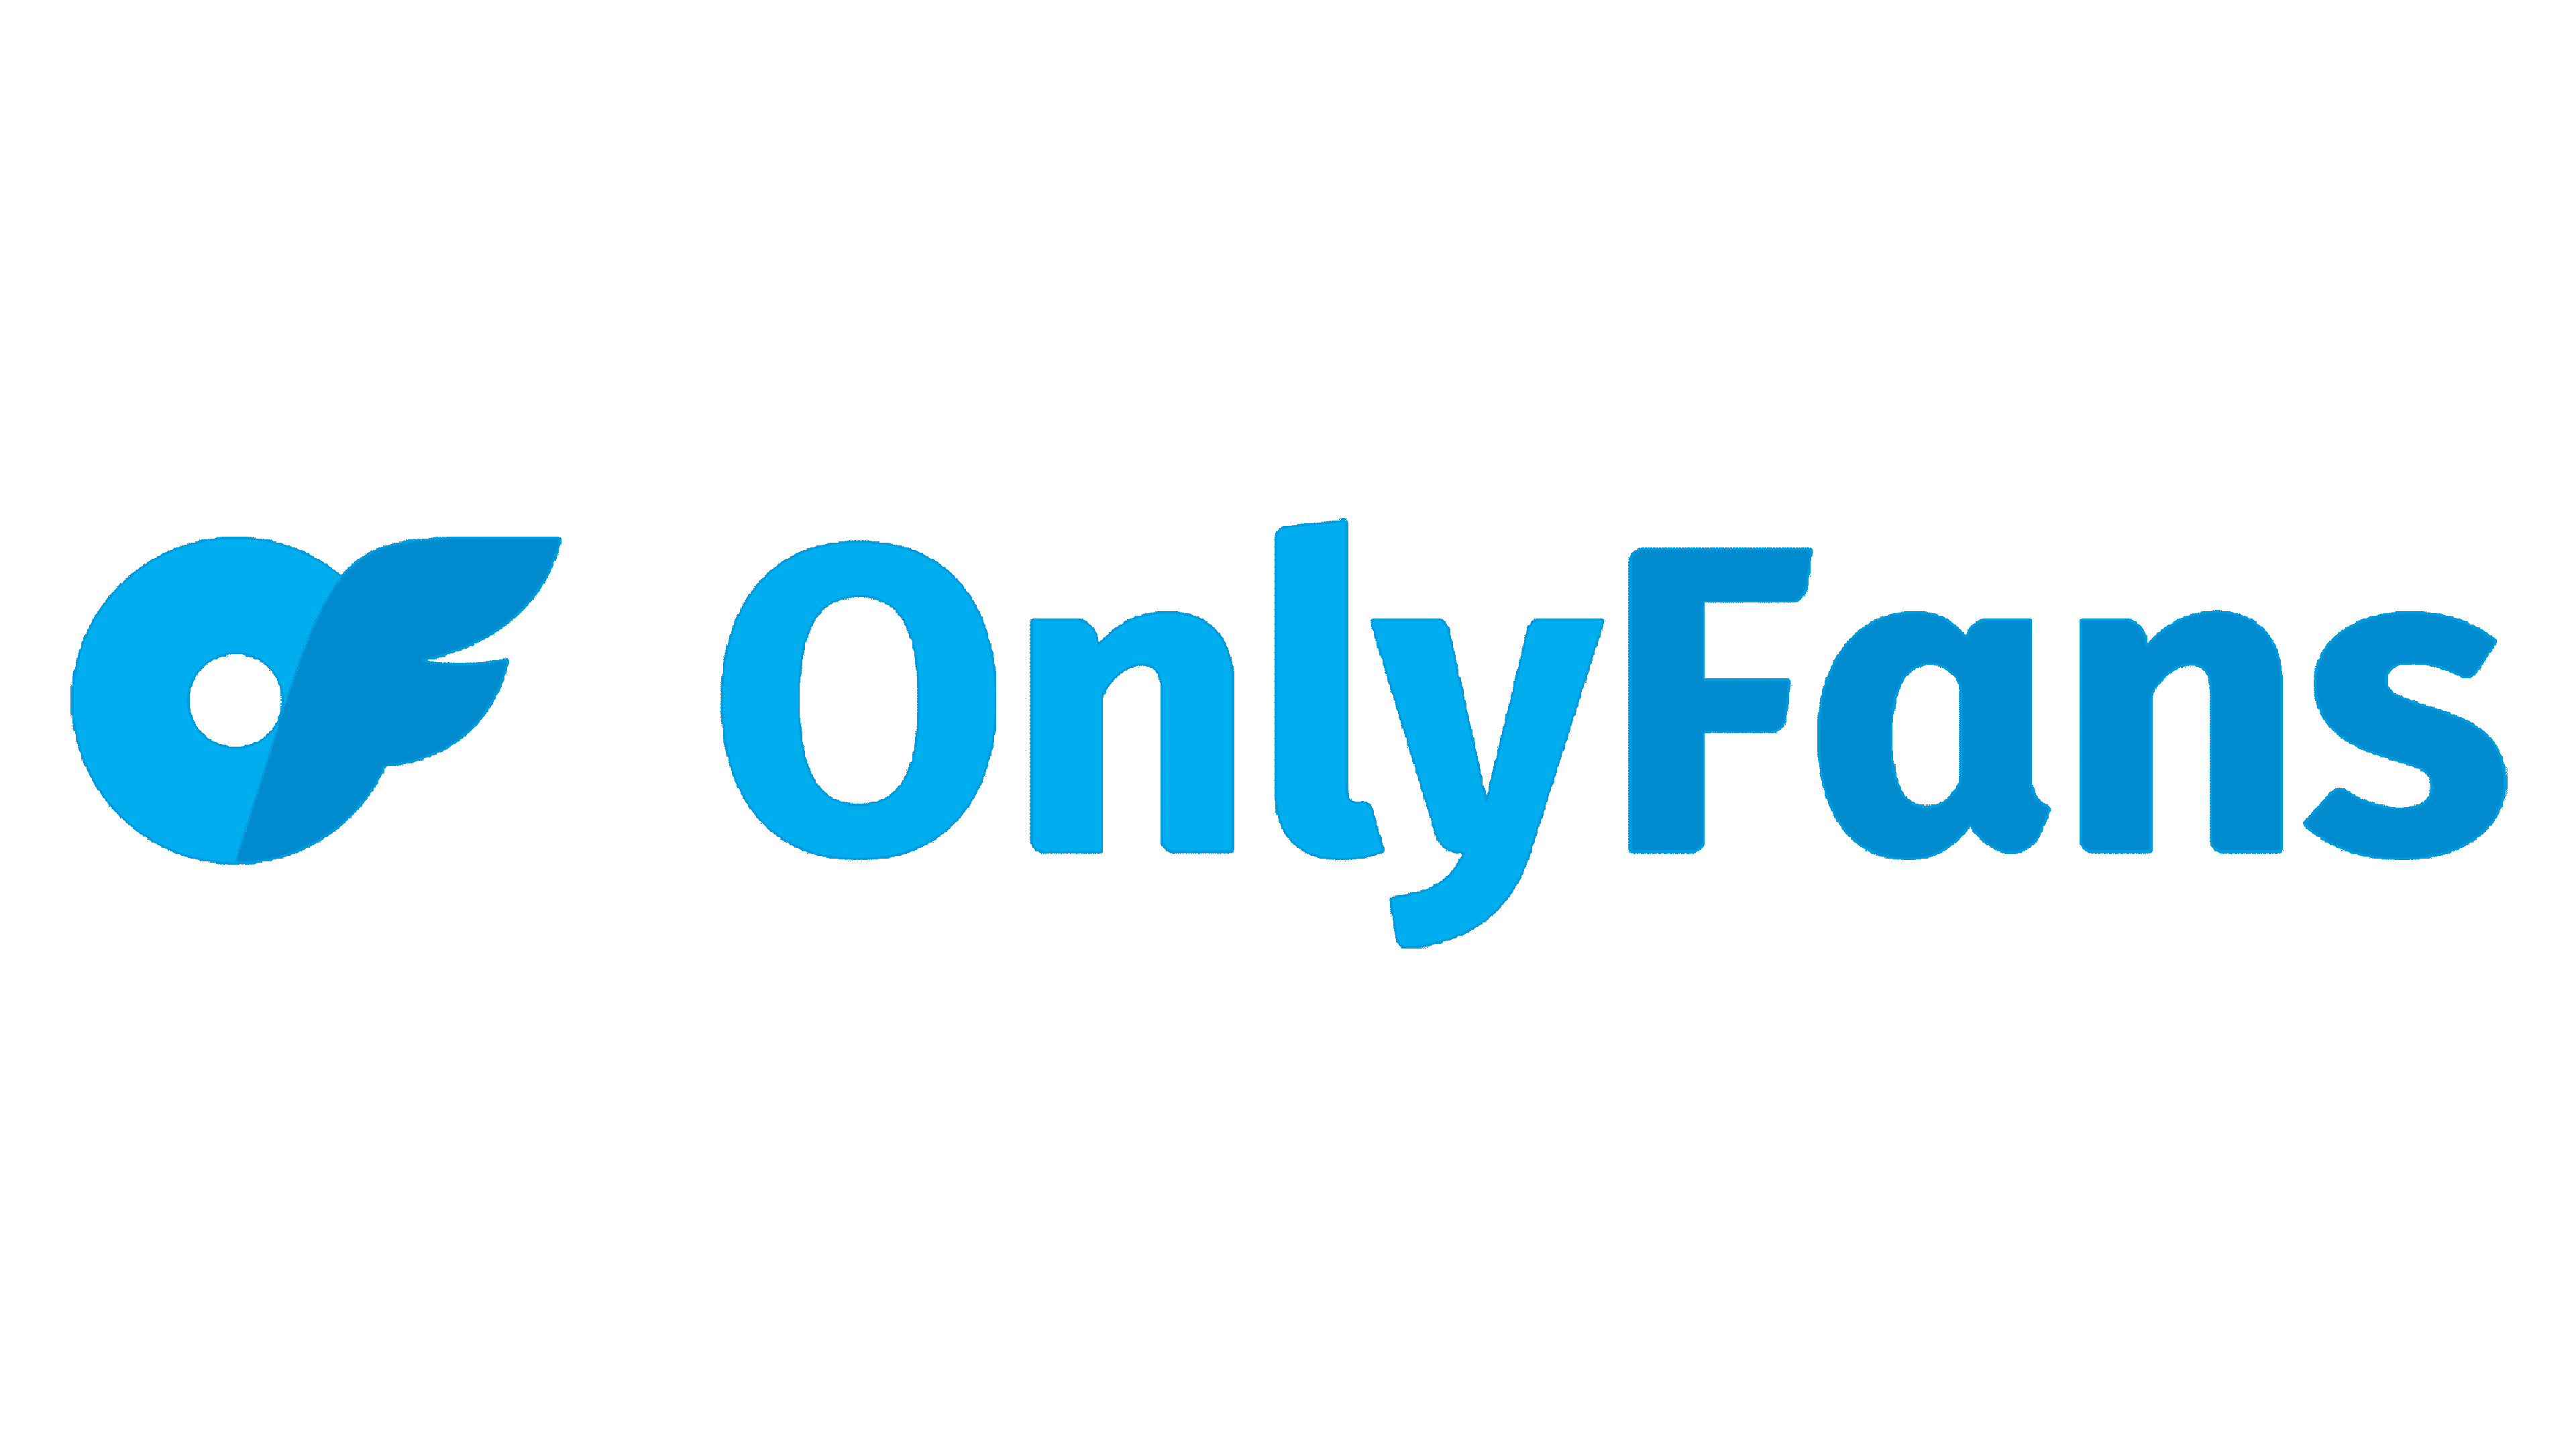 Onlyfans logo creator